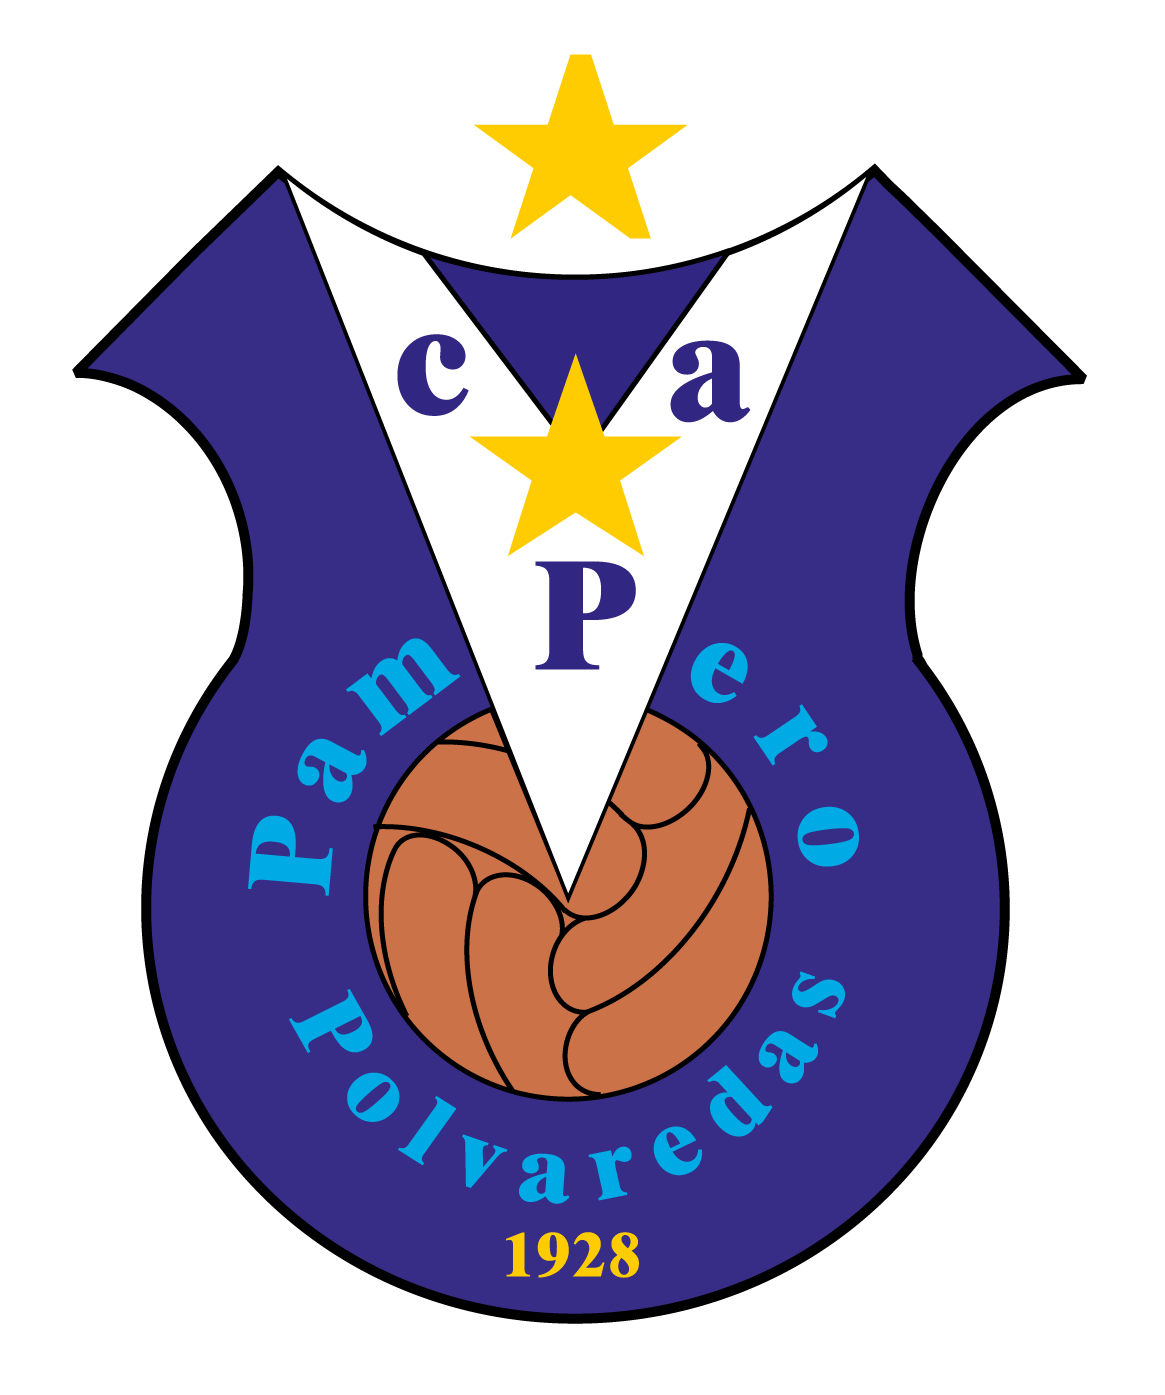 Club Atlético Pampero